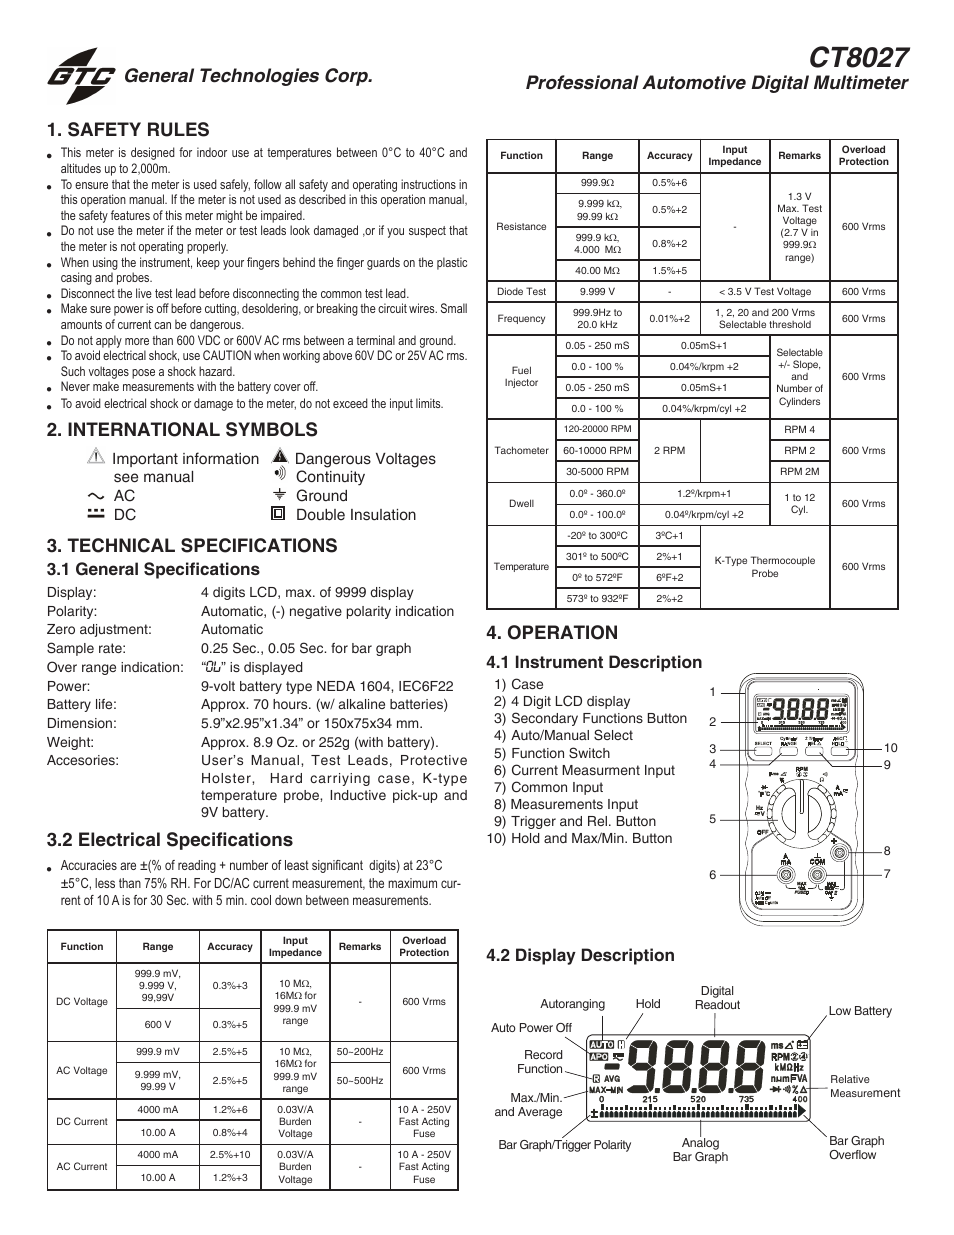 CT8027 Professional Automotive Digital Multimeter